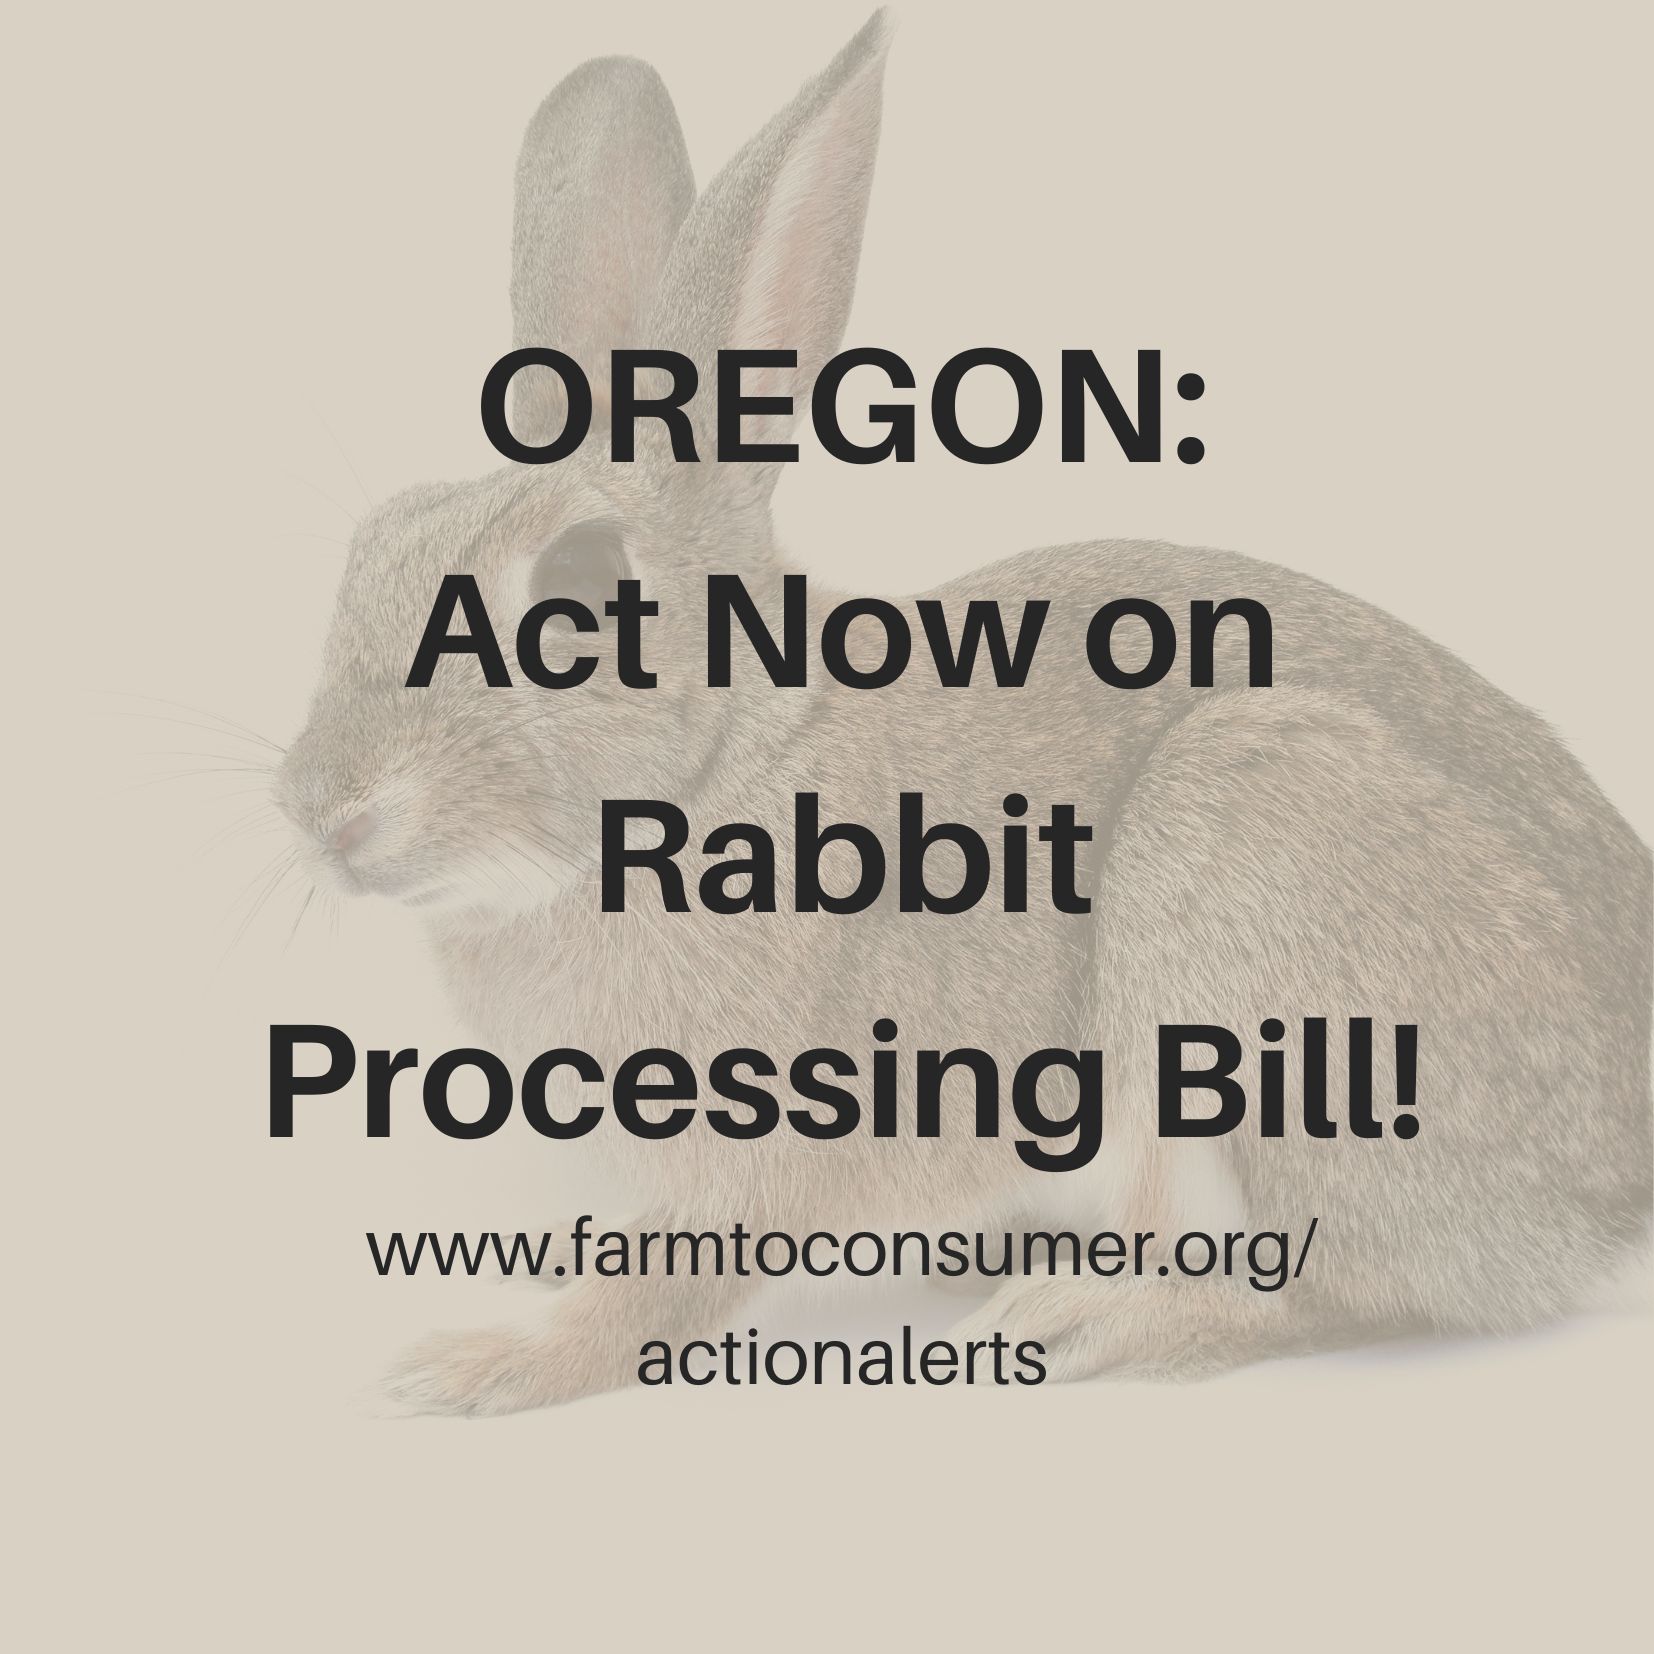 Washington State Pickles Action Alert